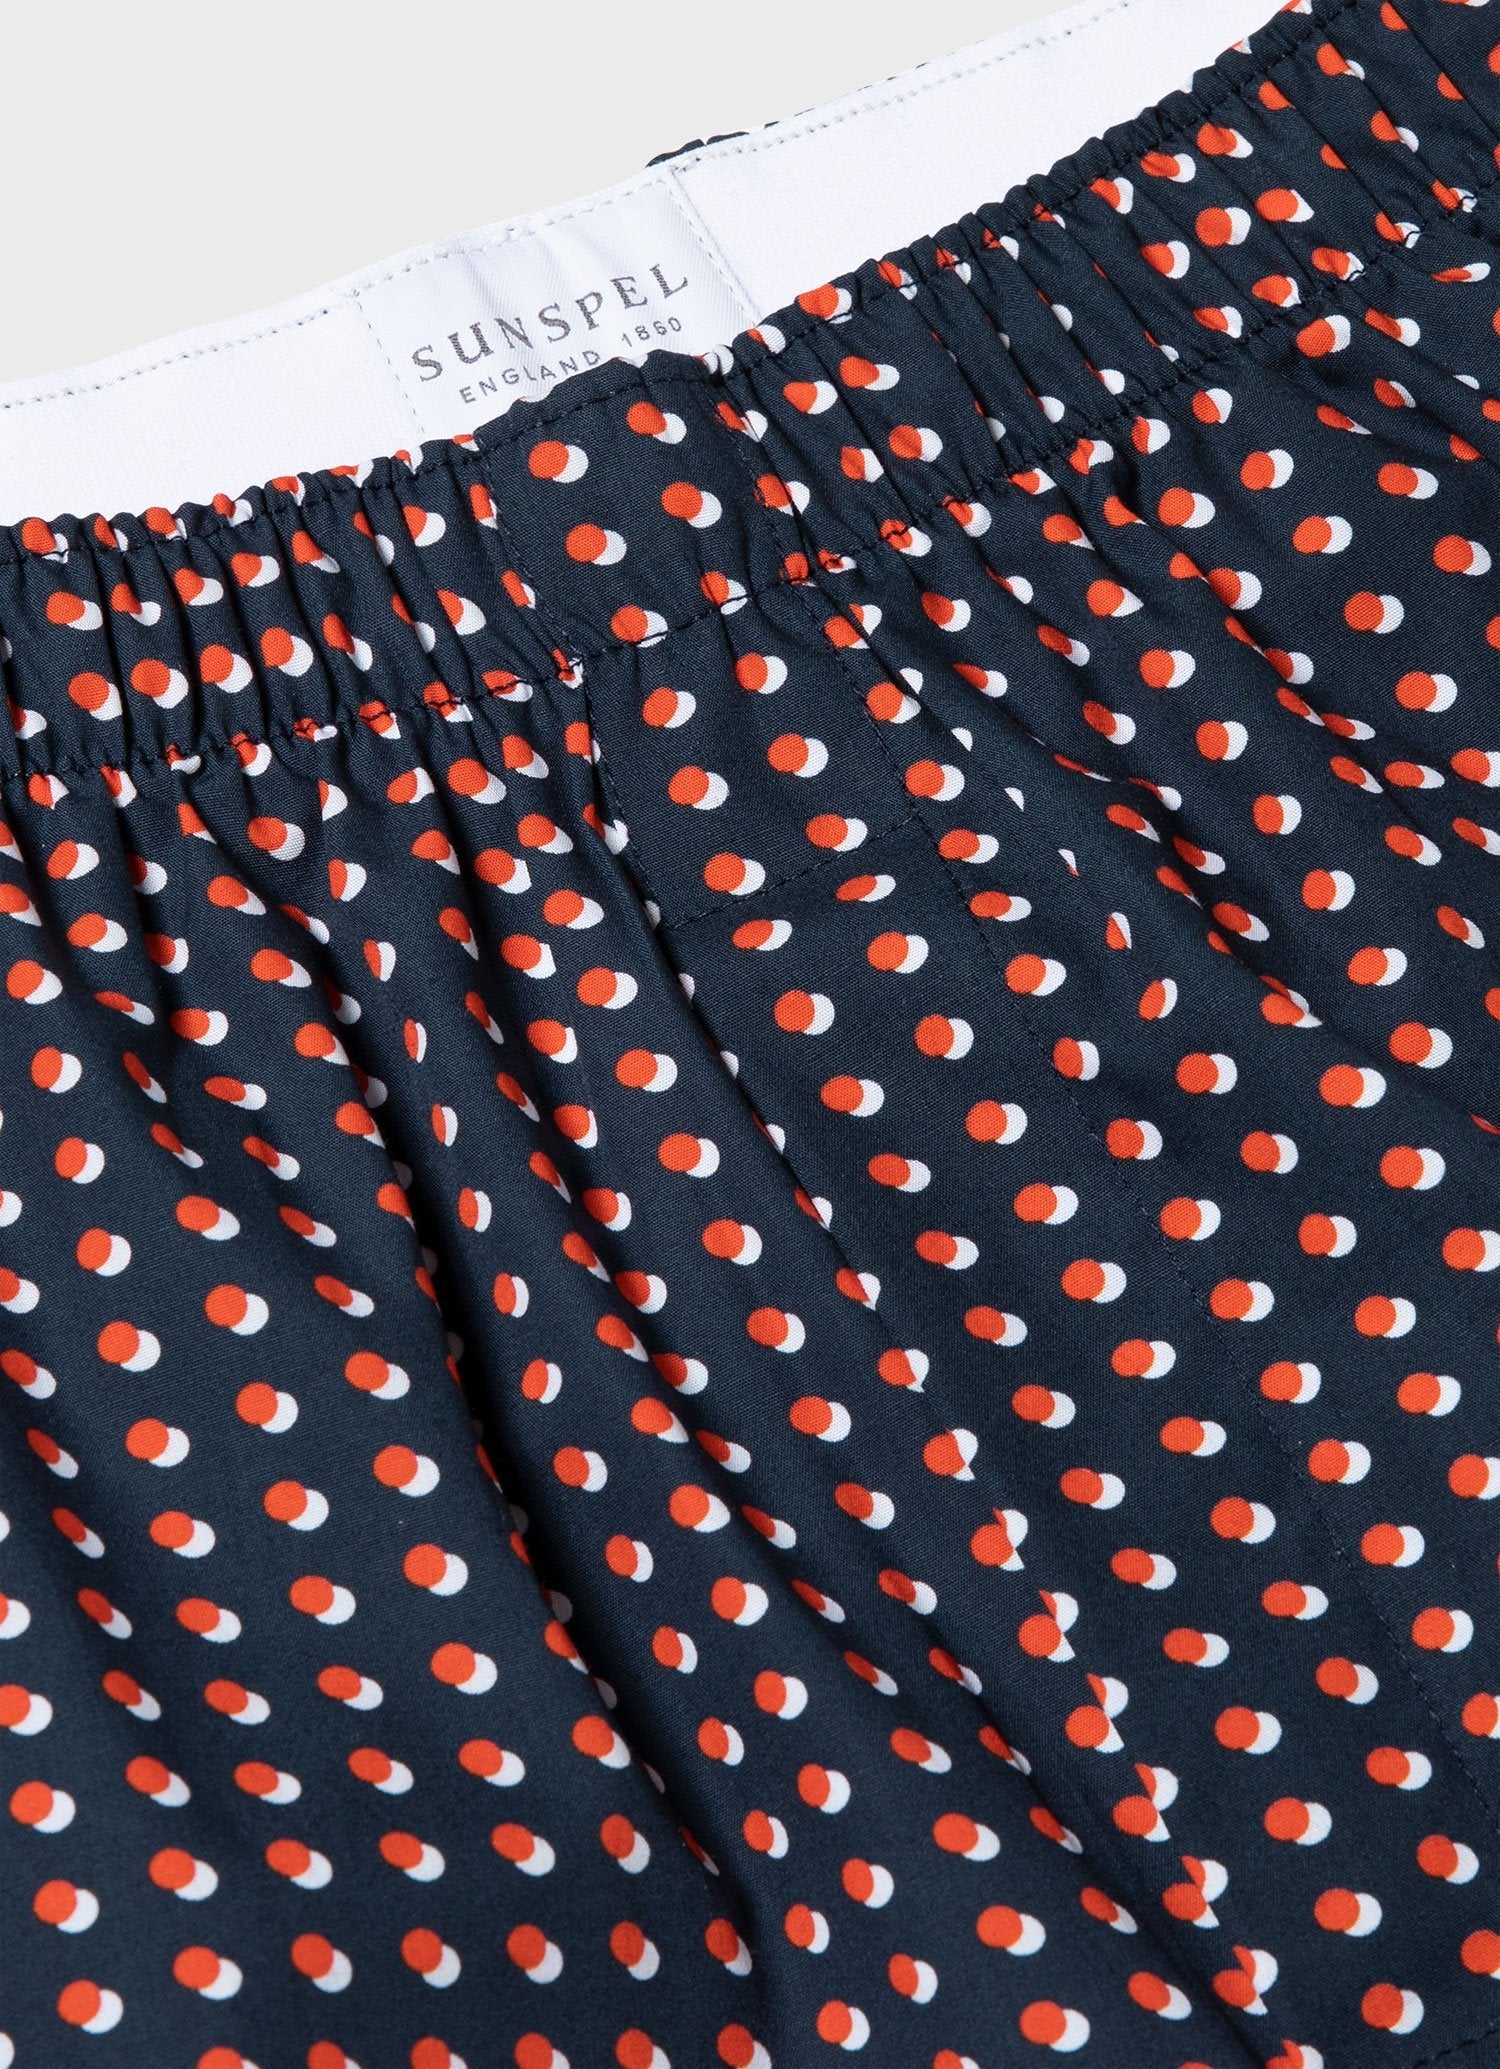 Men's Classic Print Boxer Shorts in Navy/Orange Shadow Spots